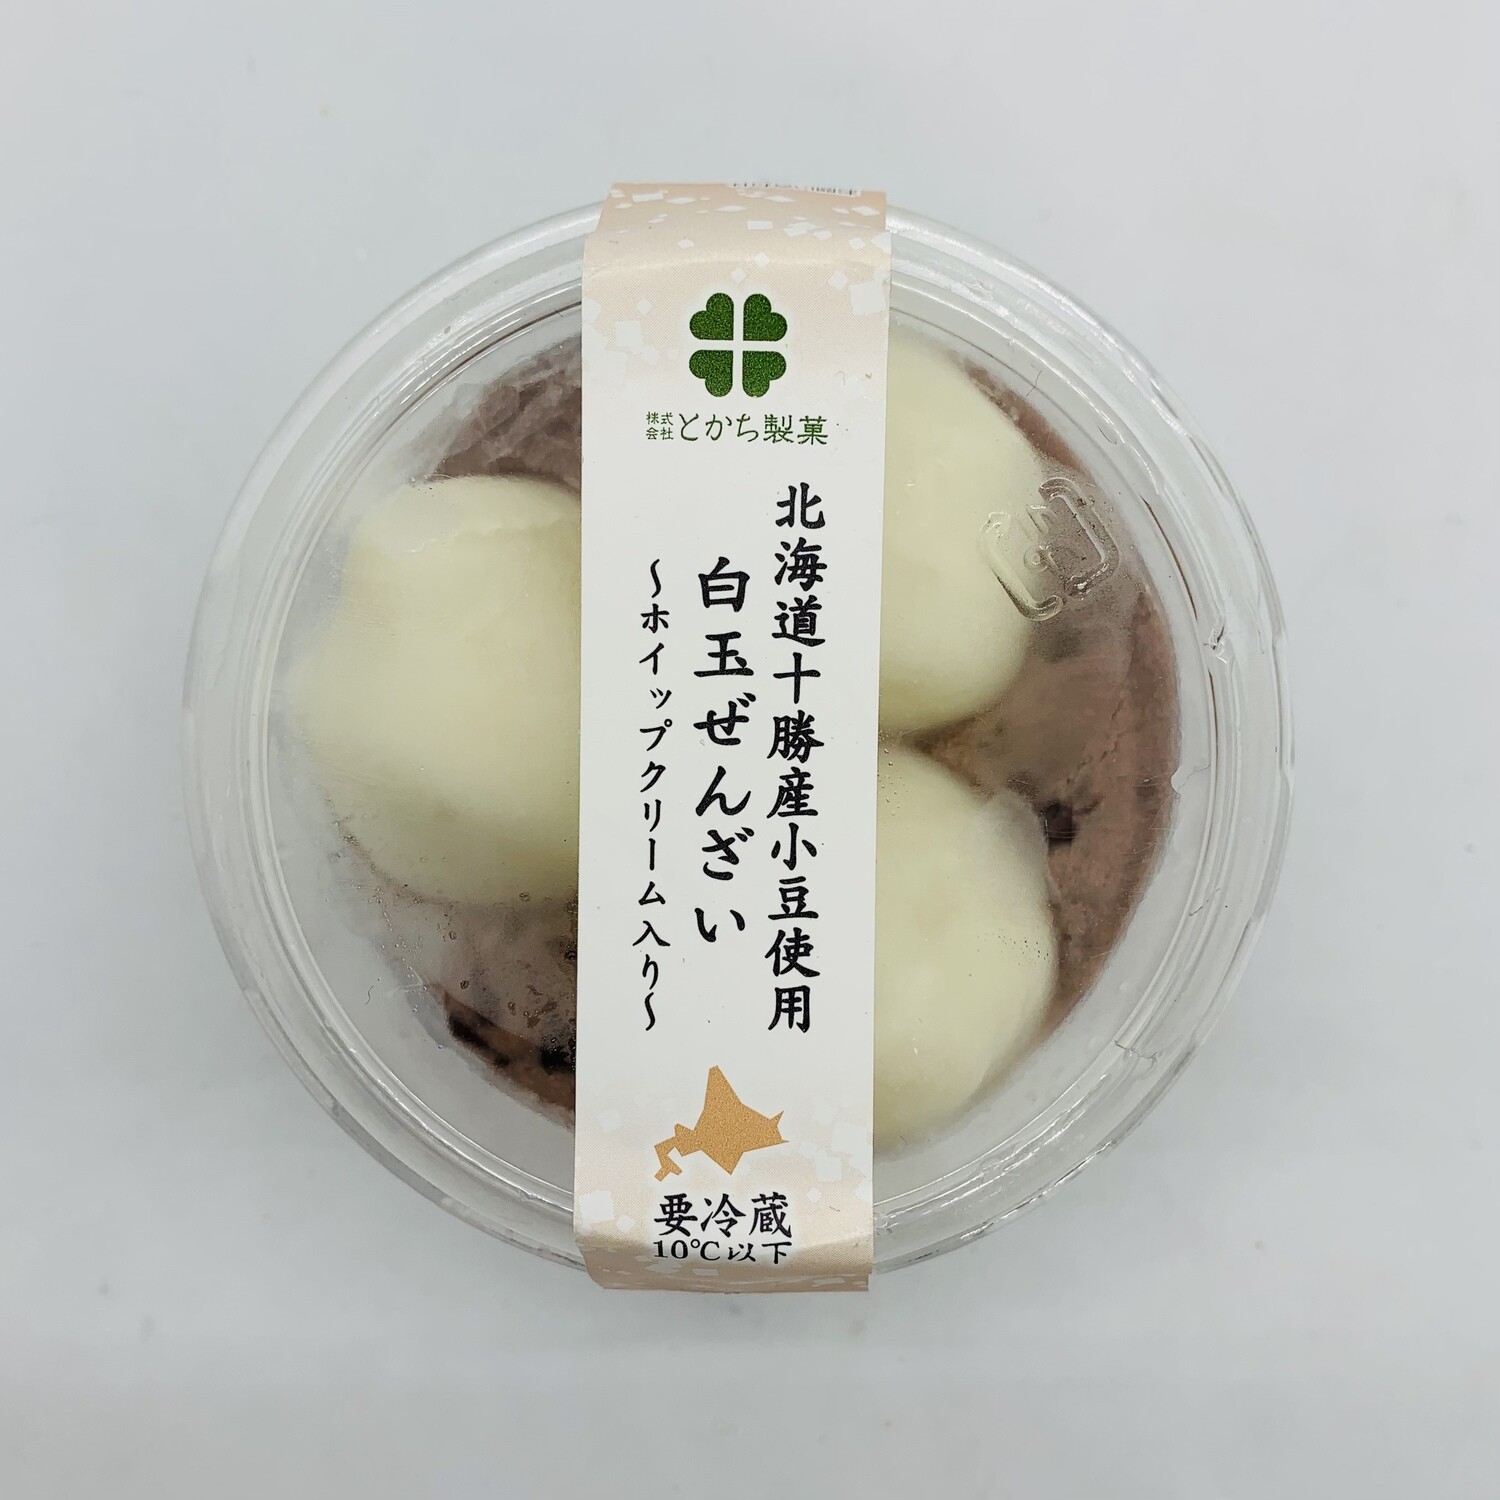 TOKACHI Shiratama Zenzai with Cream